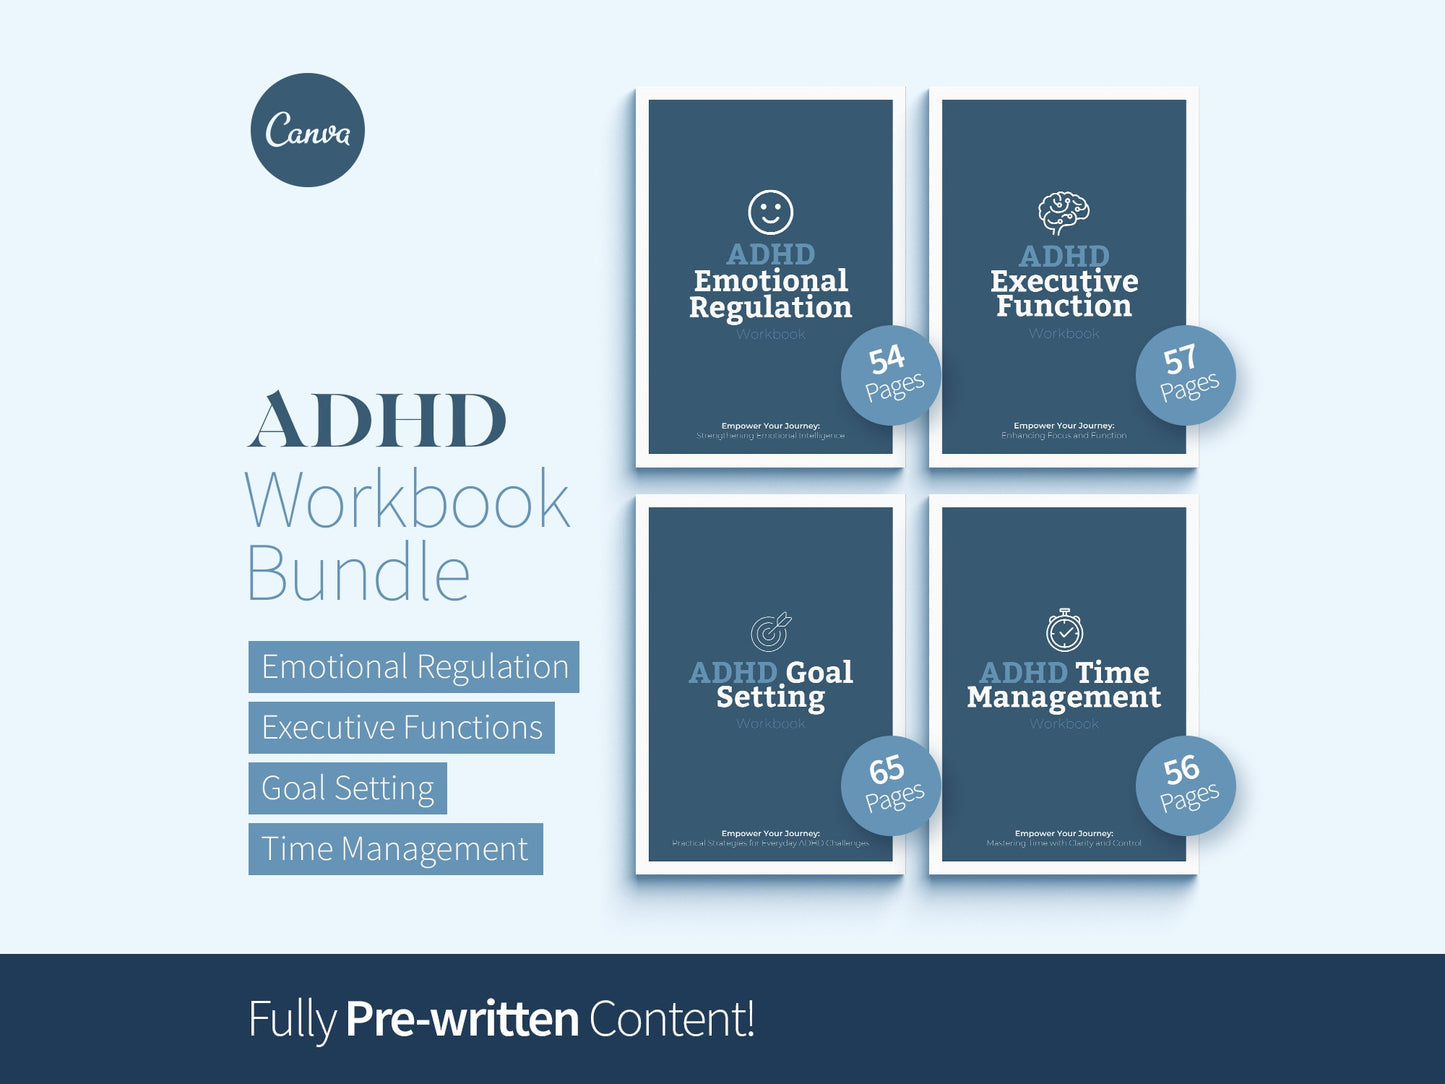 ADHD Workbook Bundle